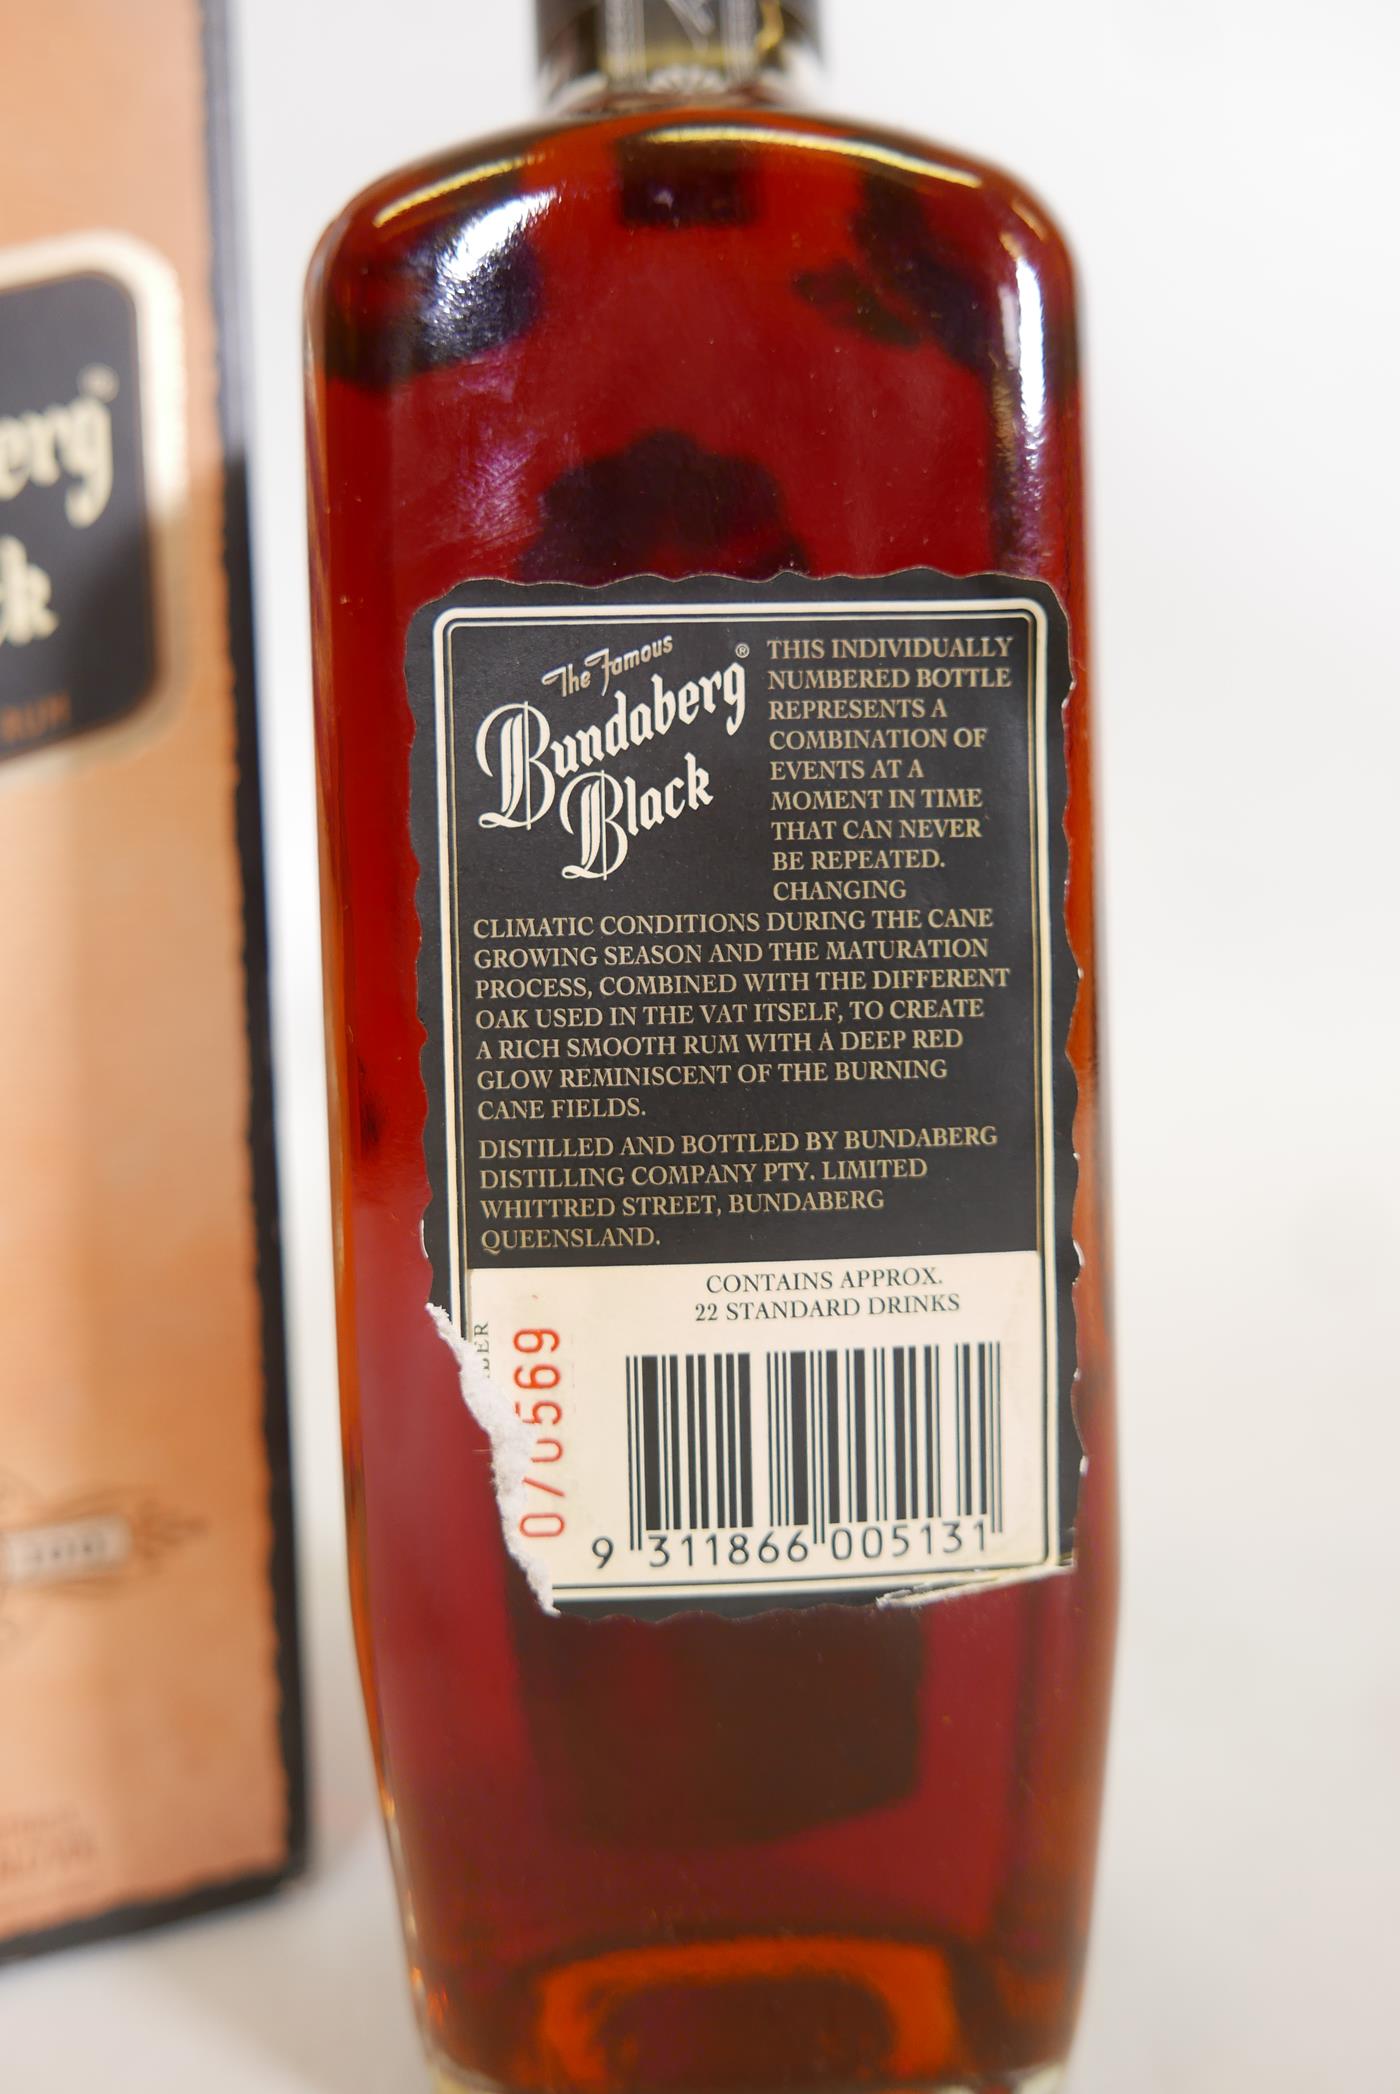 A rare bottle of Australian Bundaberg Black Rum, VAT 100, 1985, No. 070569, in original box - Image 3 of 4